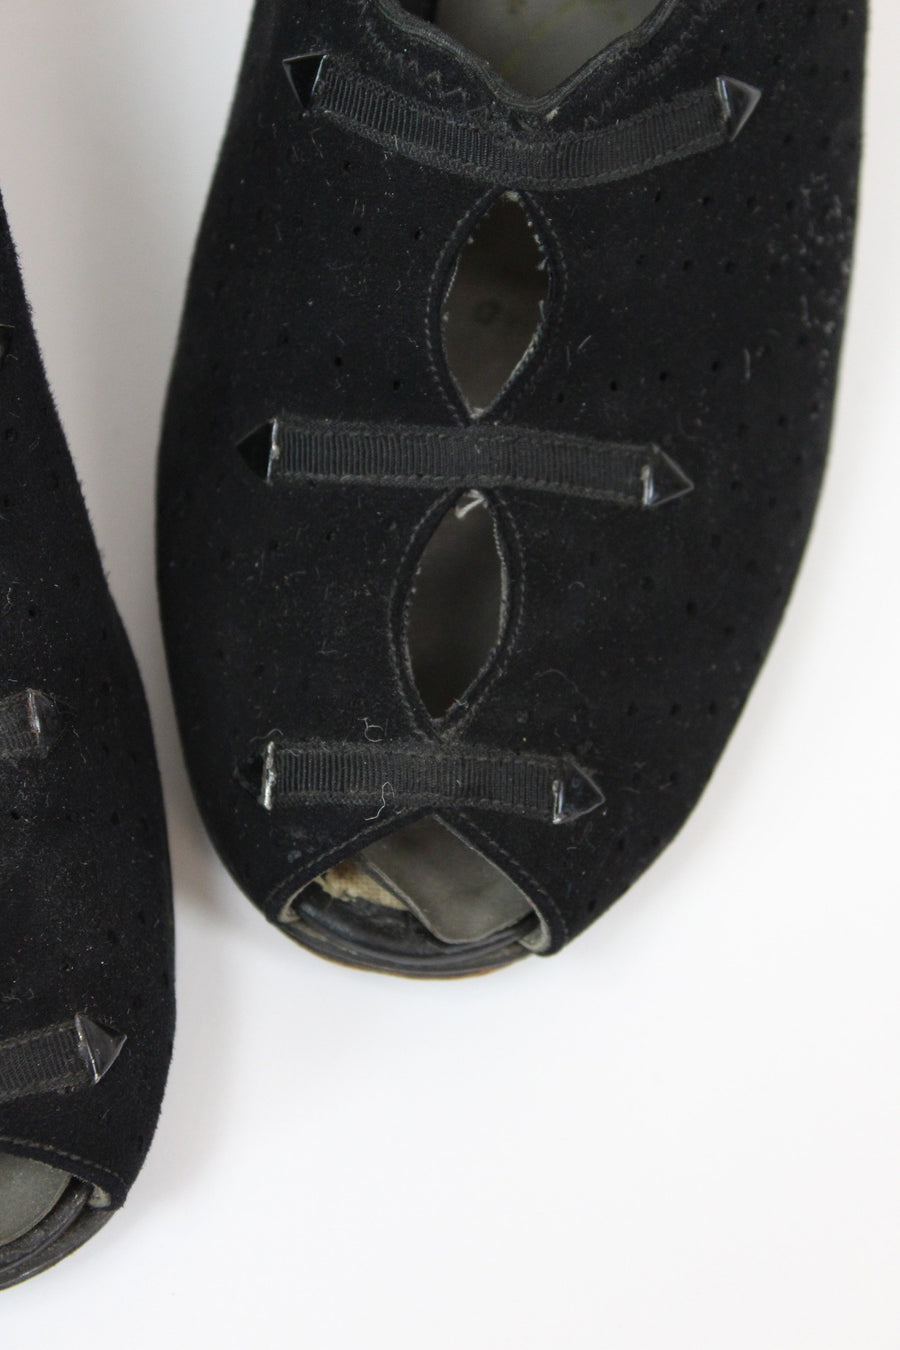 1930s Enna Jettick suede shoes | peeptoe arrow pumps | size 5.5 6 us